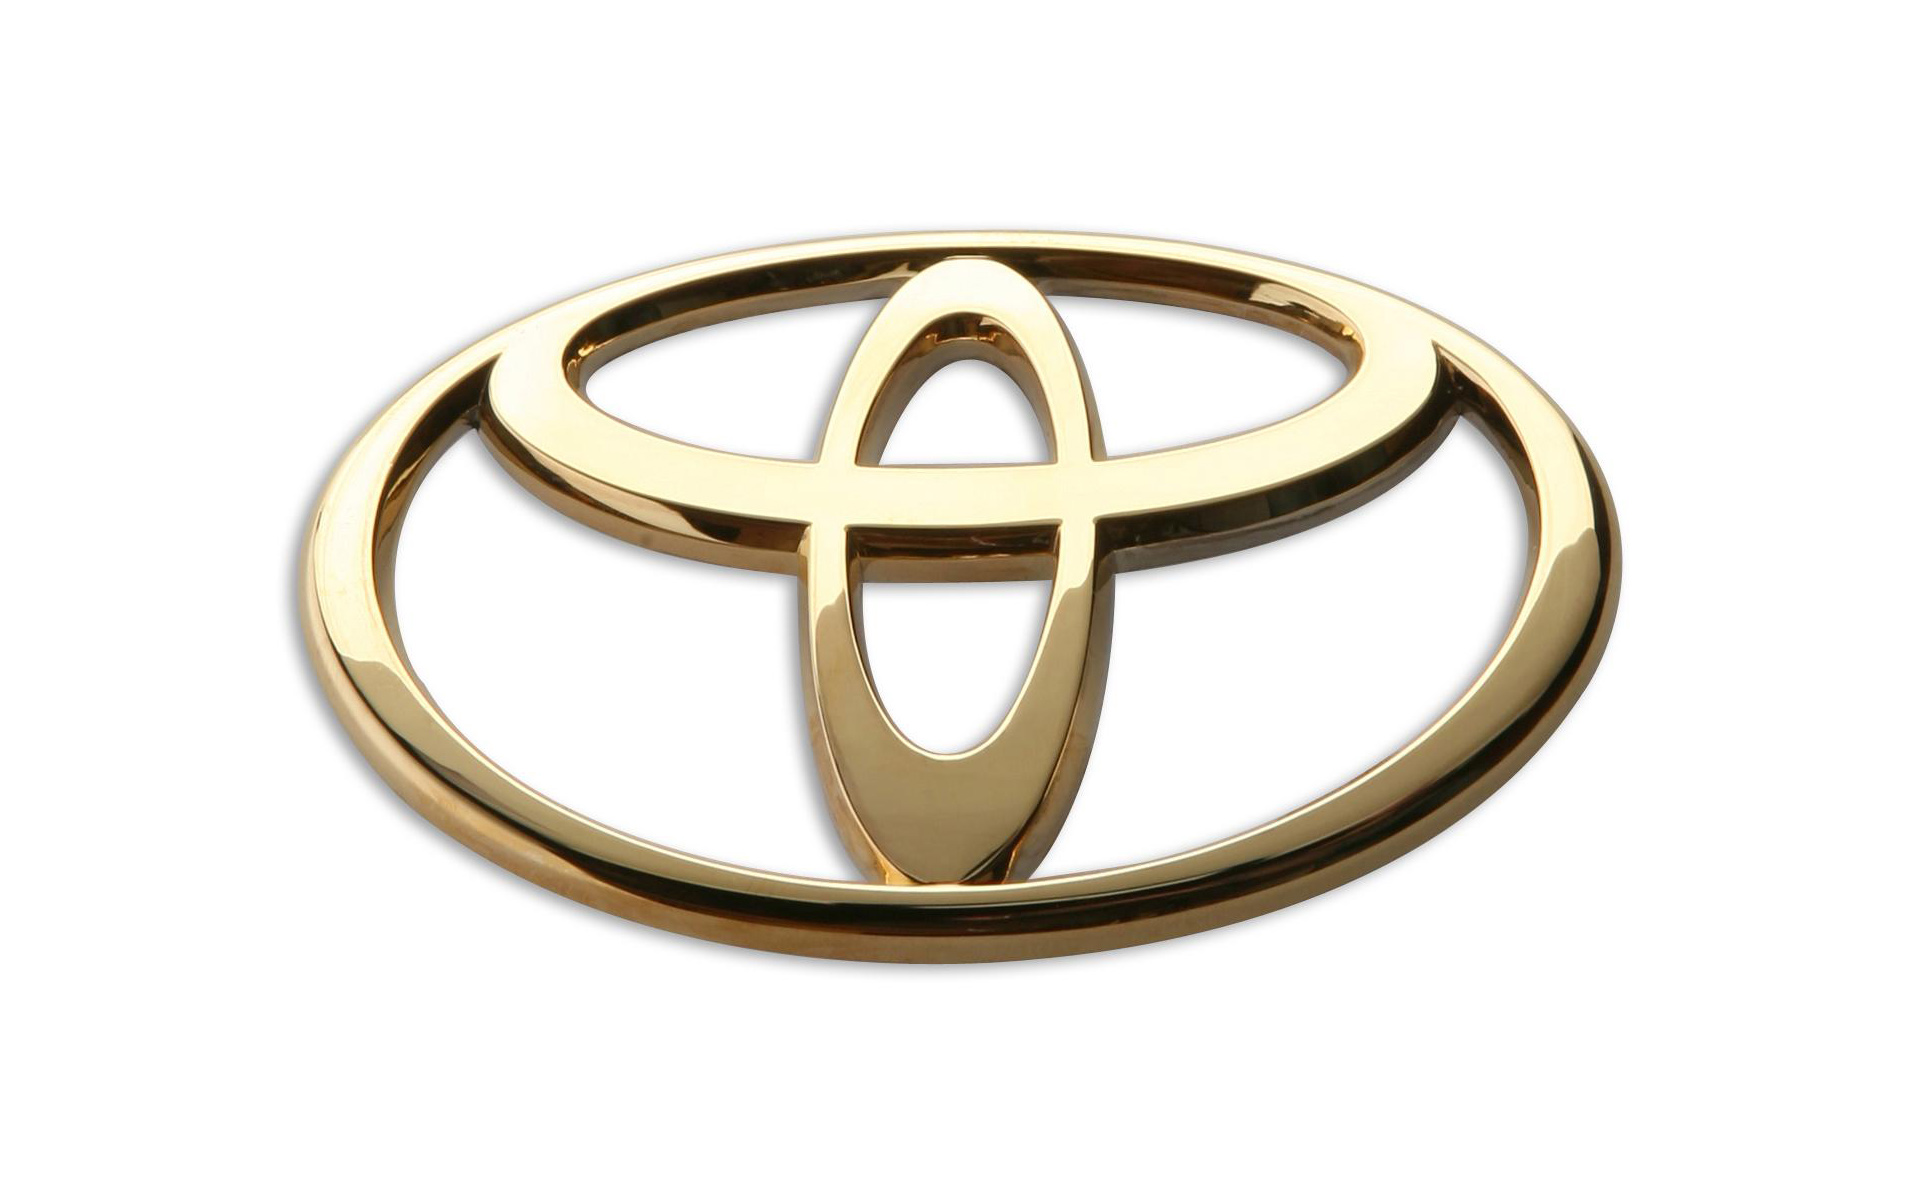 Toyota logo introduced